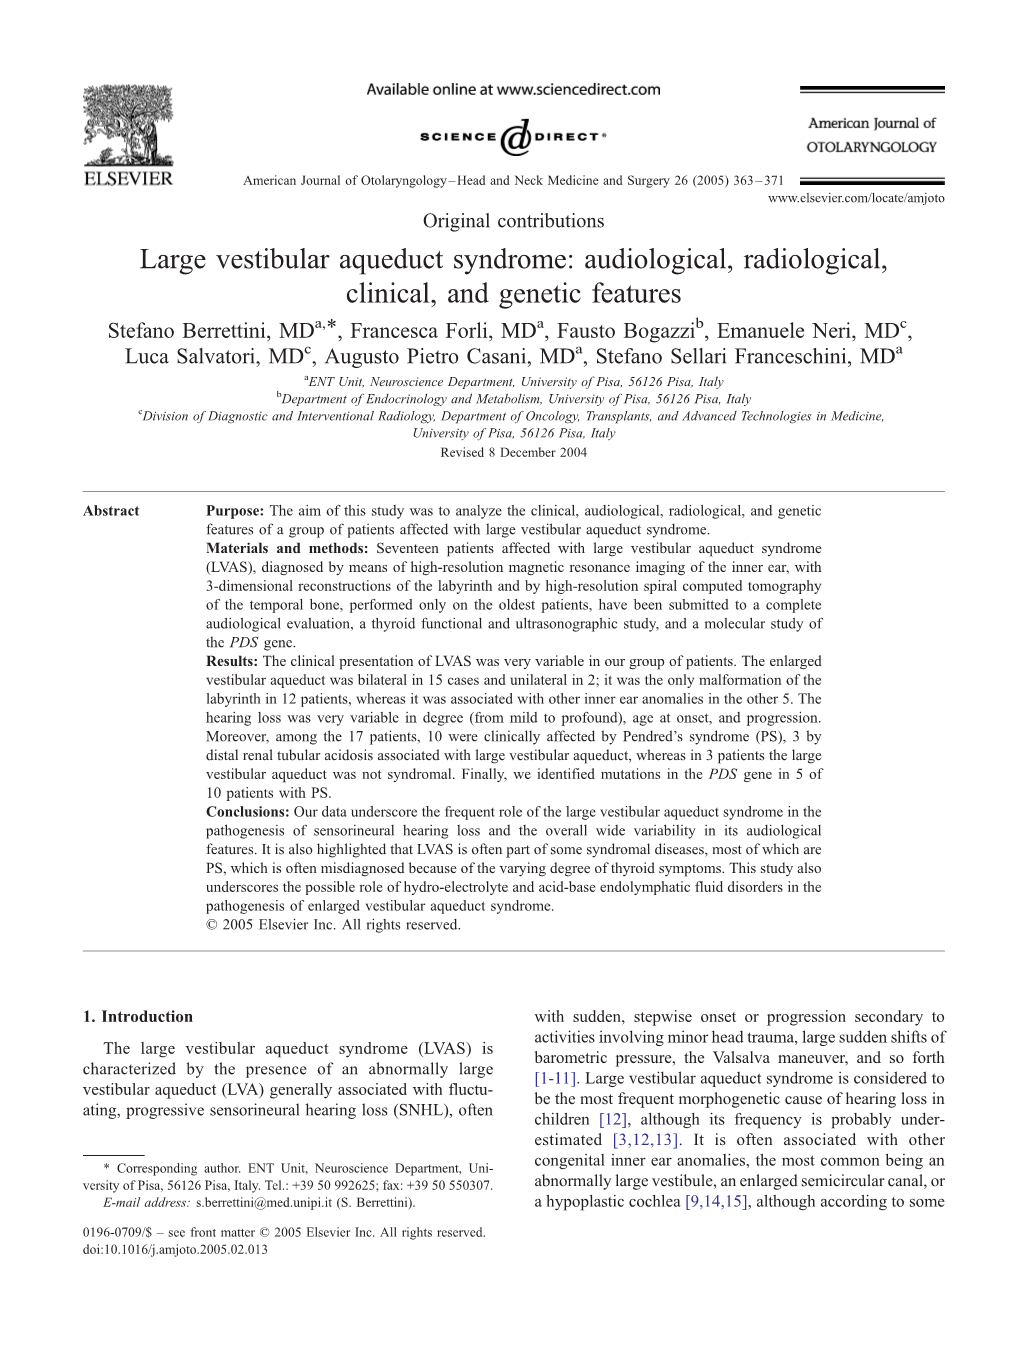 Large Vestibular Aqueduct Syndrome: Audiological, Radiological, Clinical